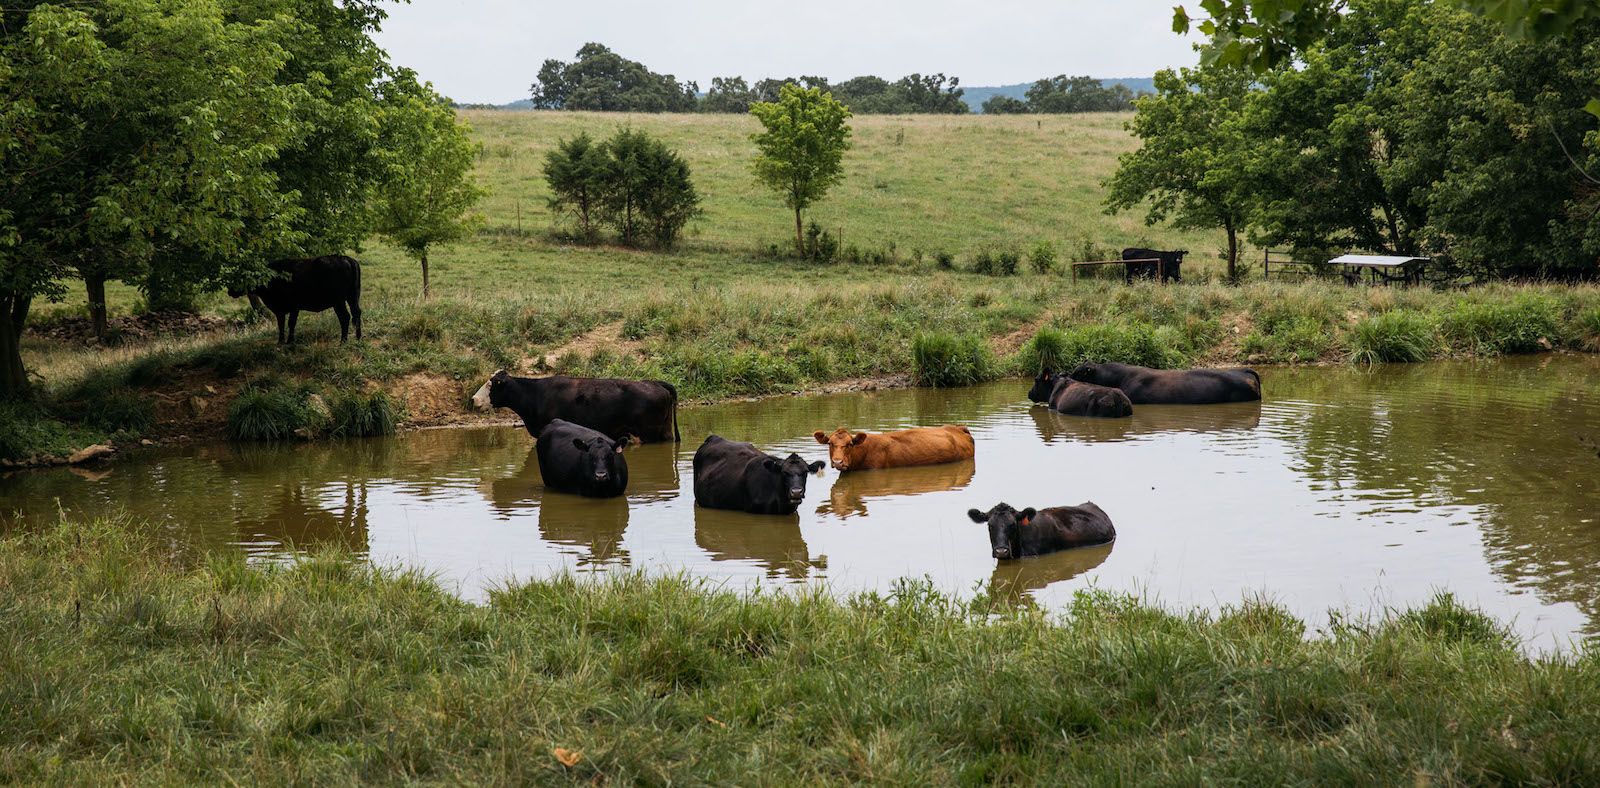 Cows wallow in a stream in a green field